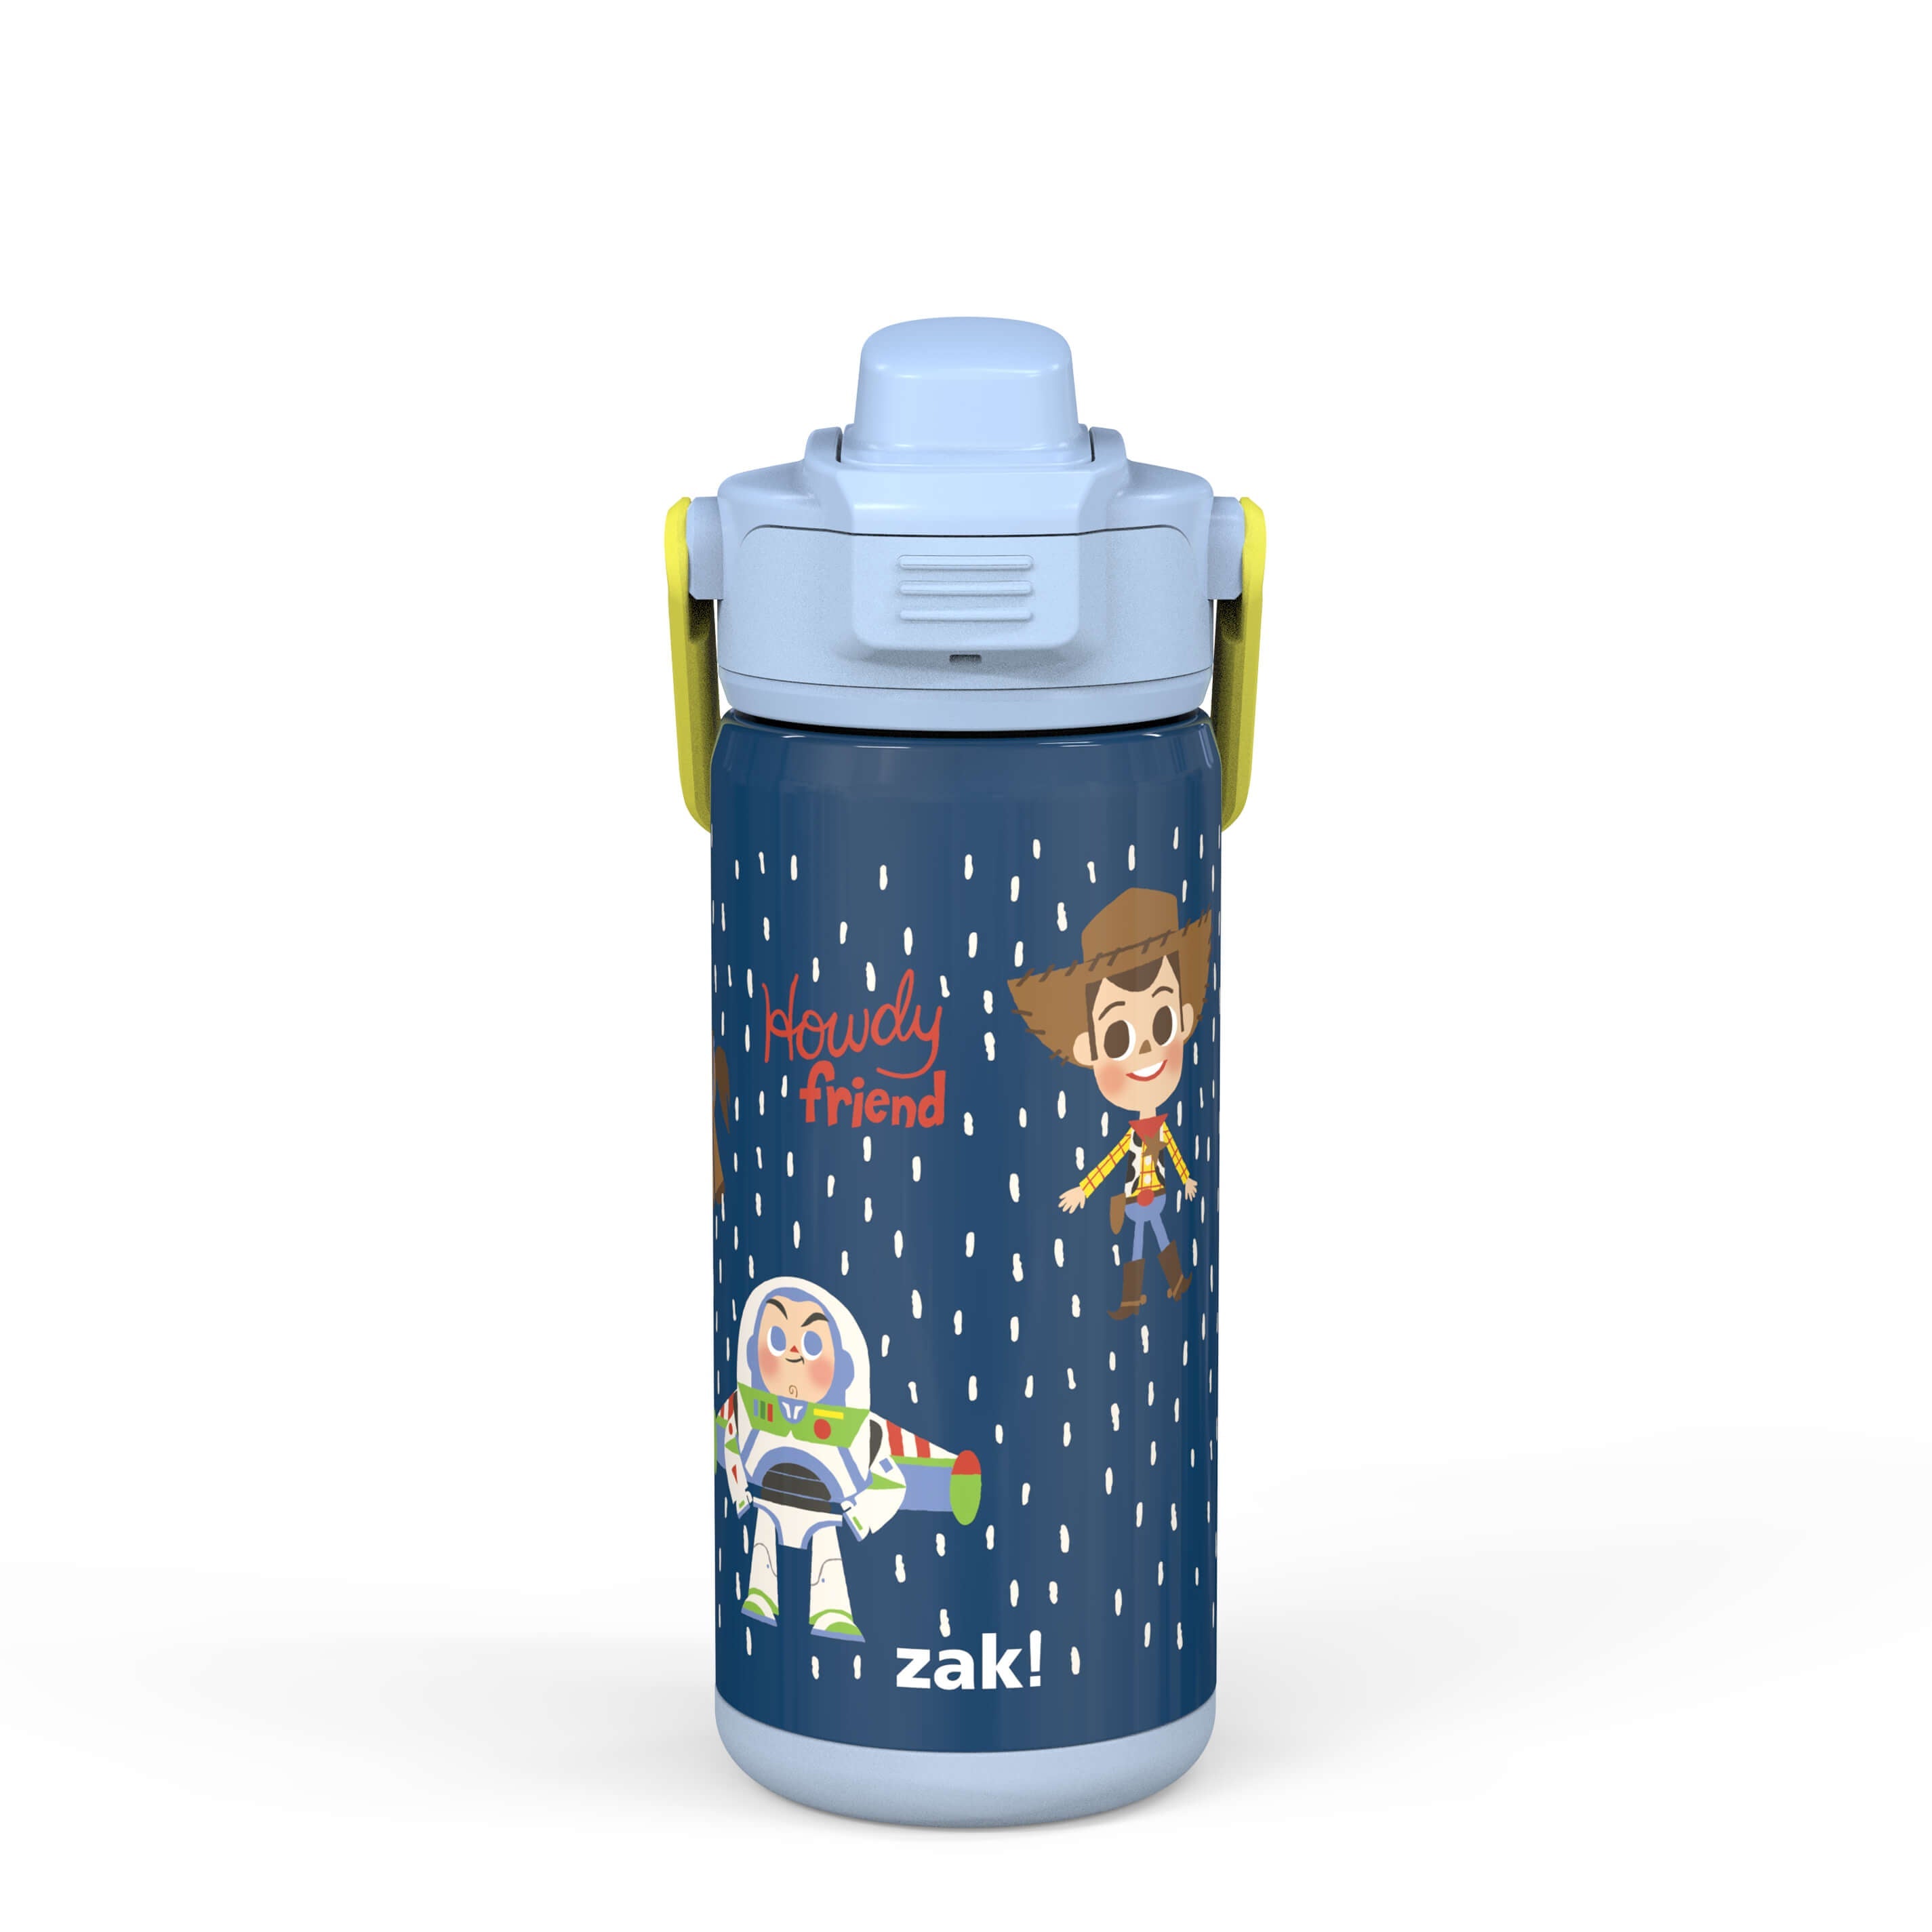 Zak! Designs Baby Shark Water Bottle - Blue, 16 oz - Fry's Food Stores